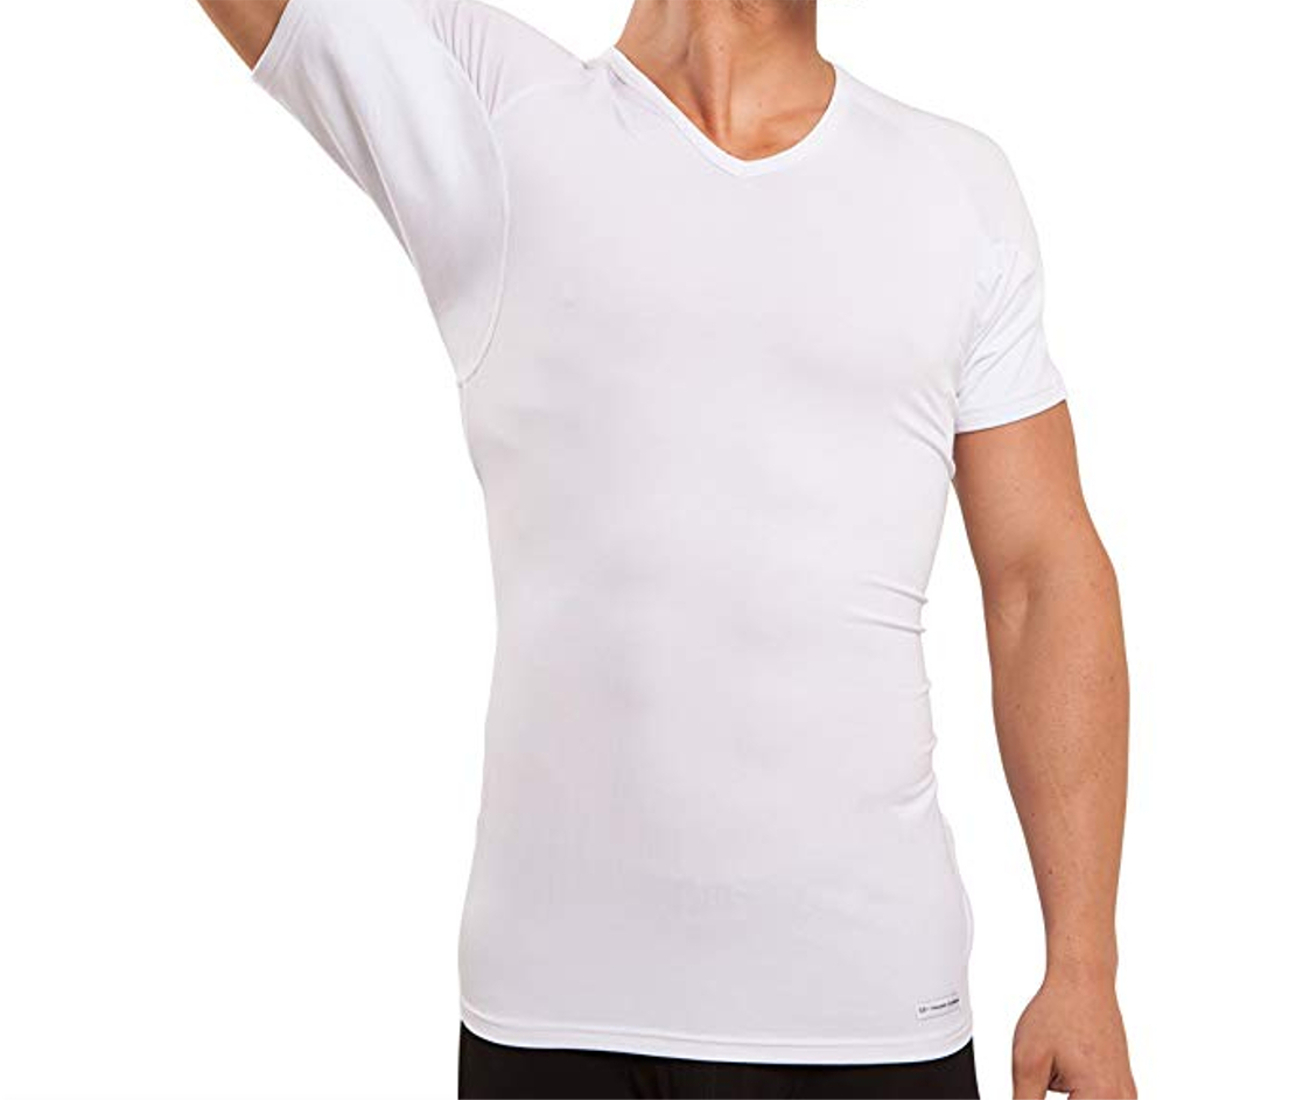 Buy Sweat Absorbent Anti Odor Quick Dry Undershirt Vest with Underarm ...